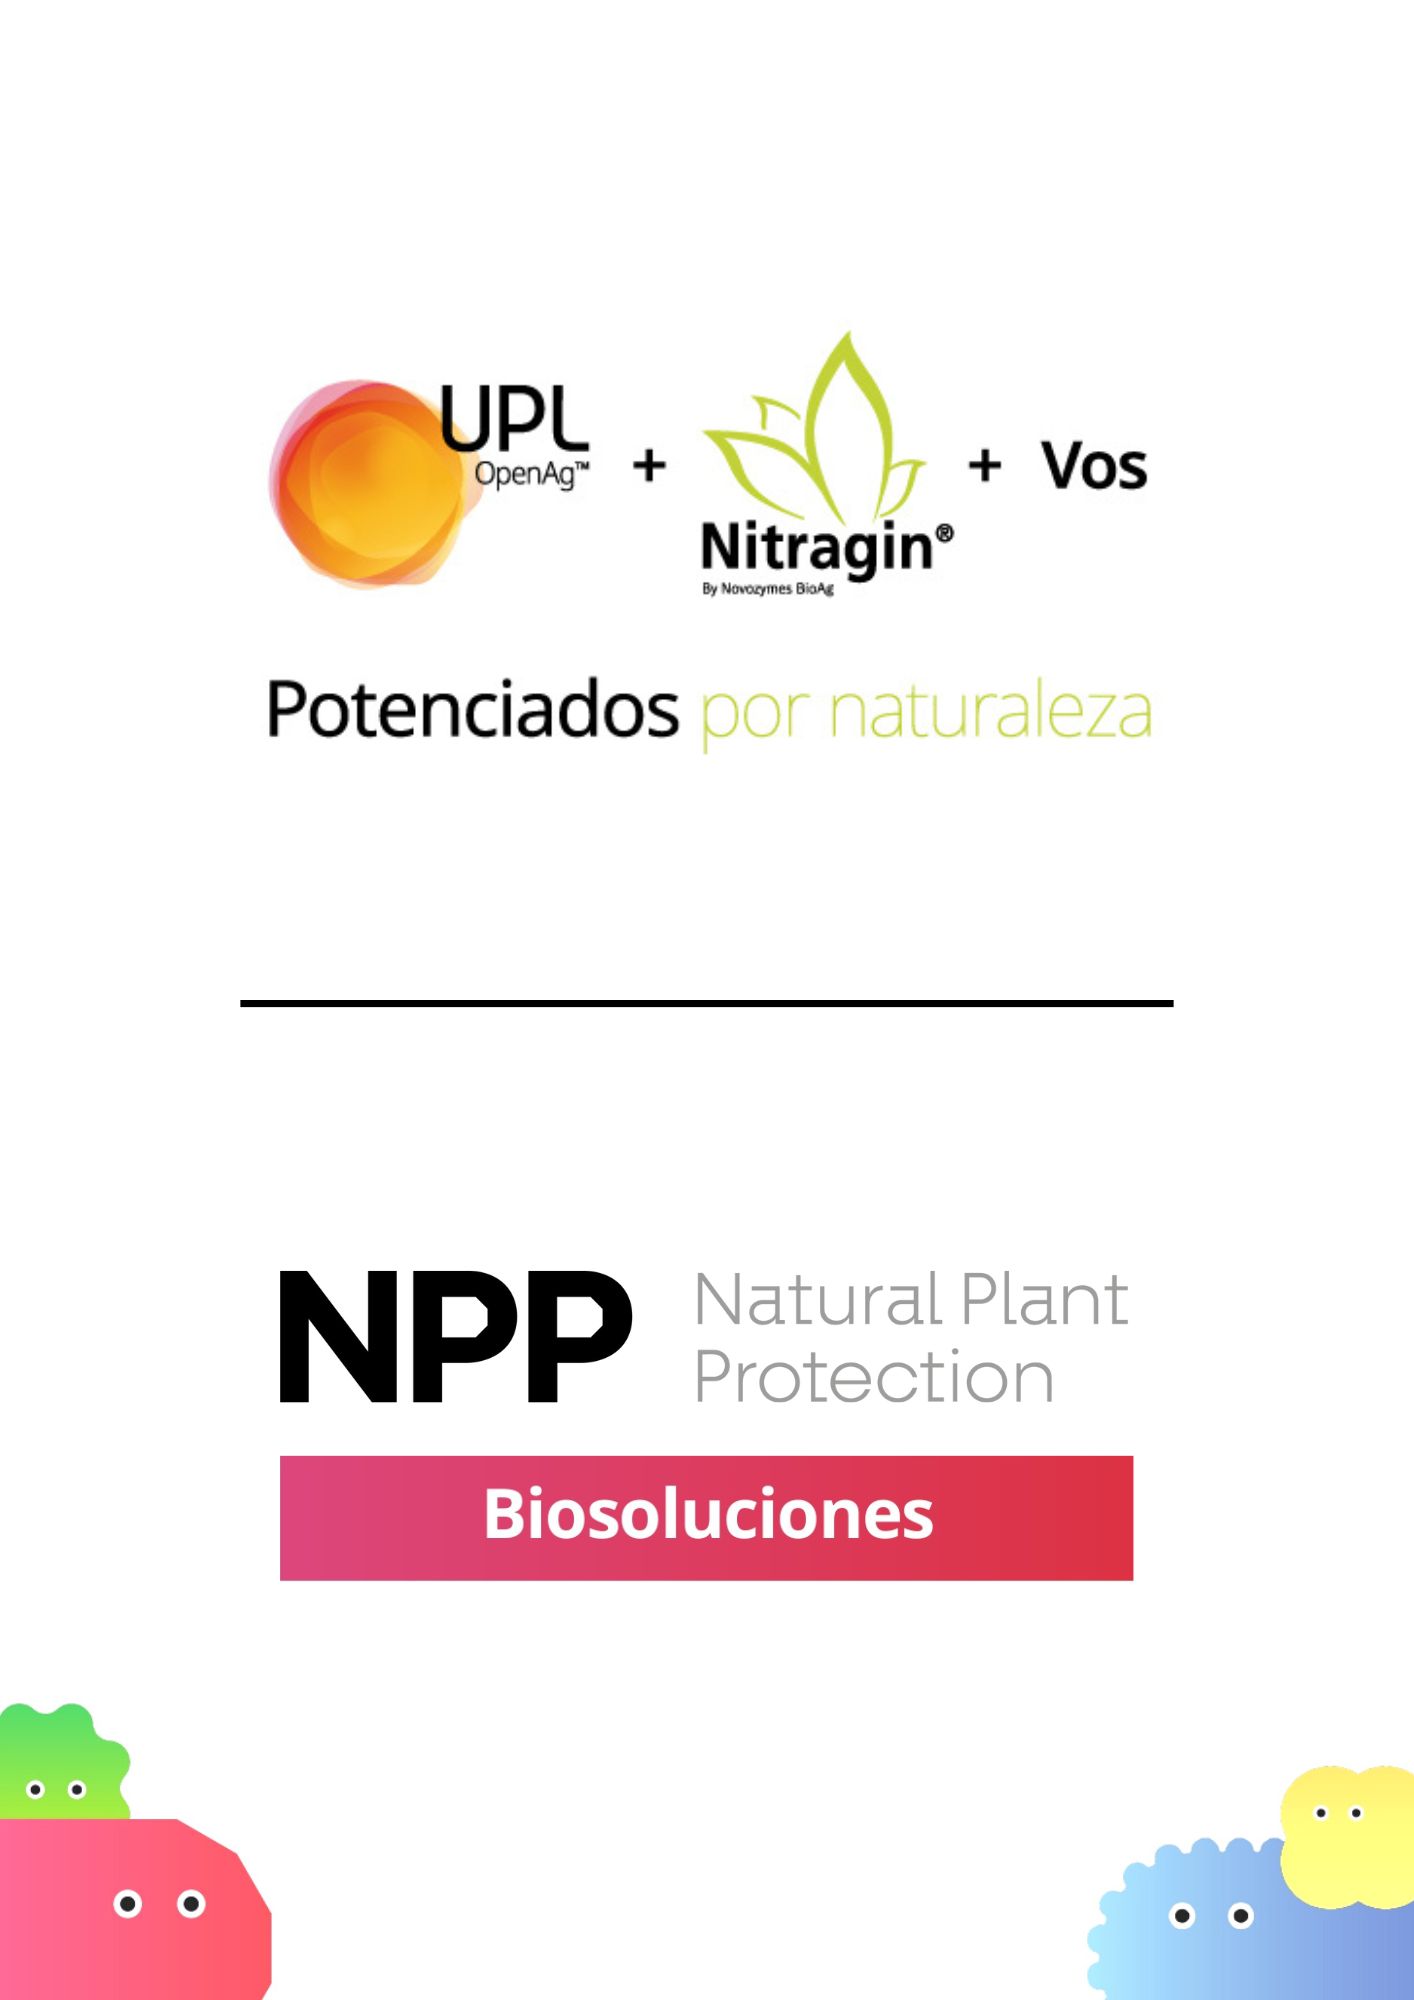 NPP by UPL + Nitragin